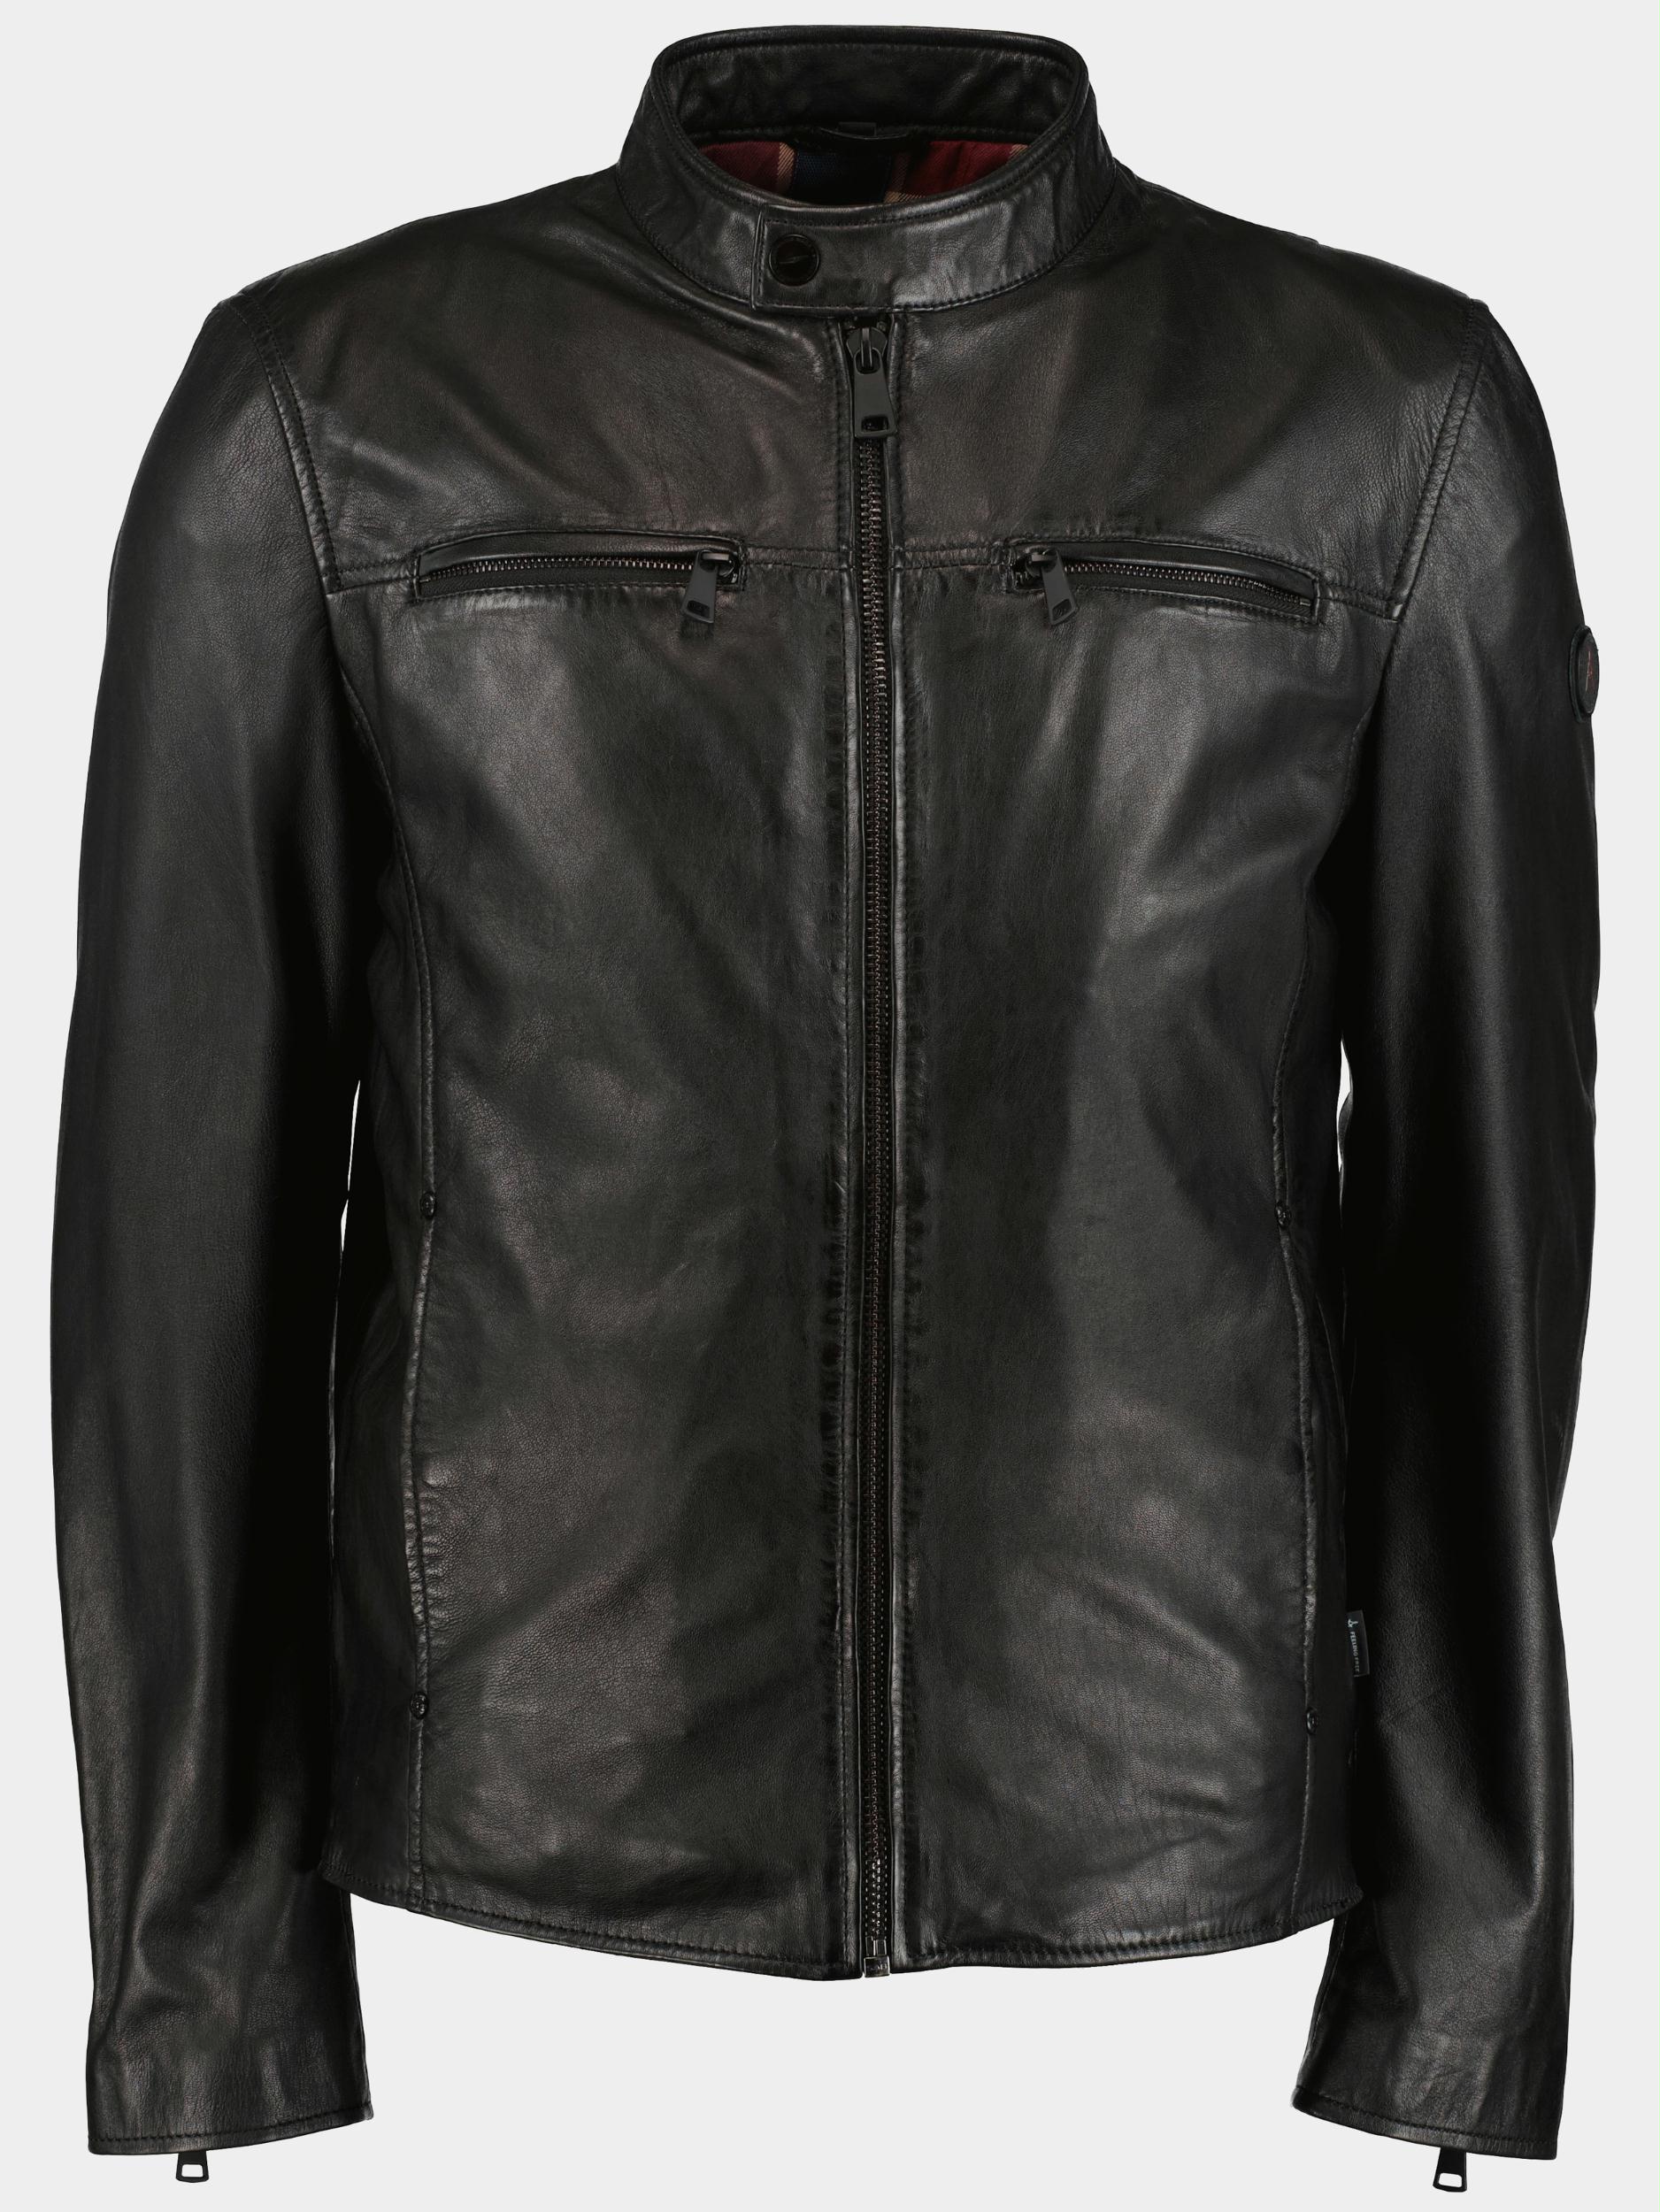 Afbeelding van DNR Lederen jack leather jacket 52360.4/999